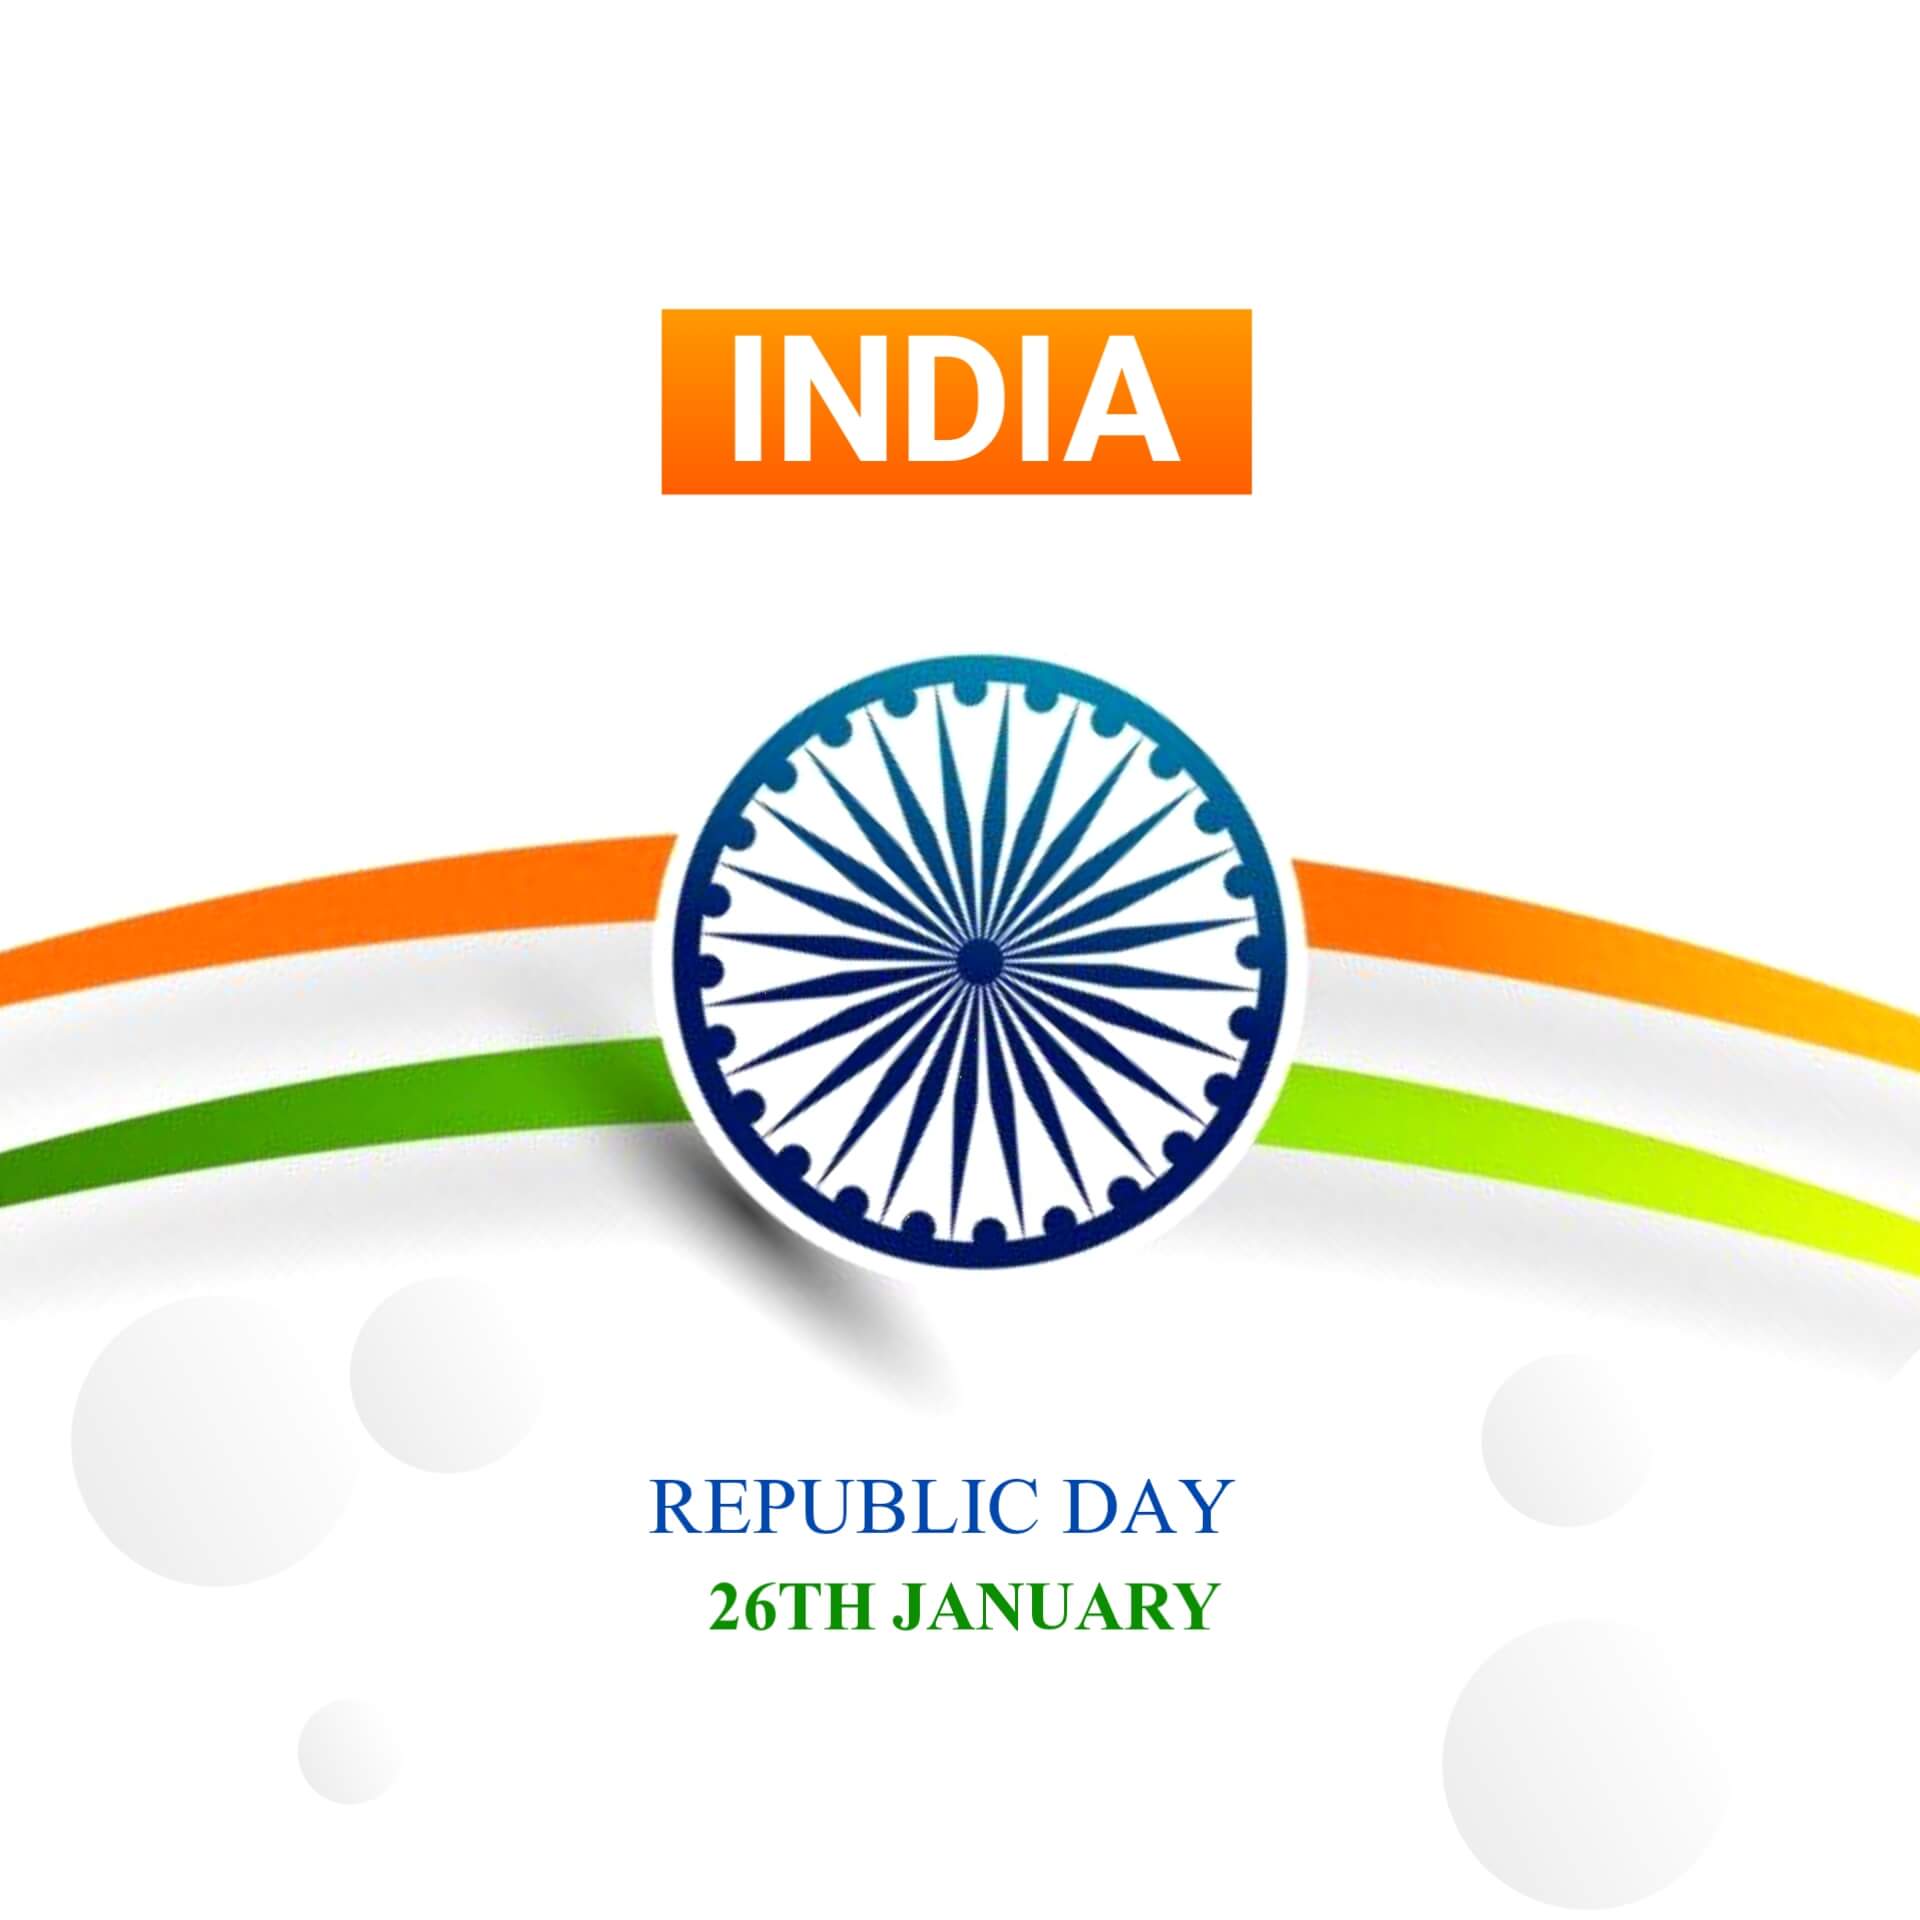 India Flag Republic Day Images